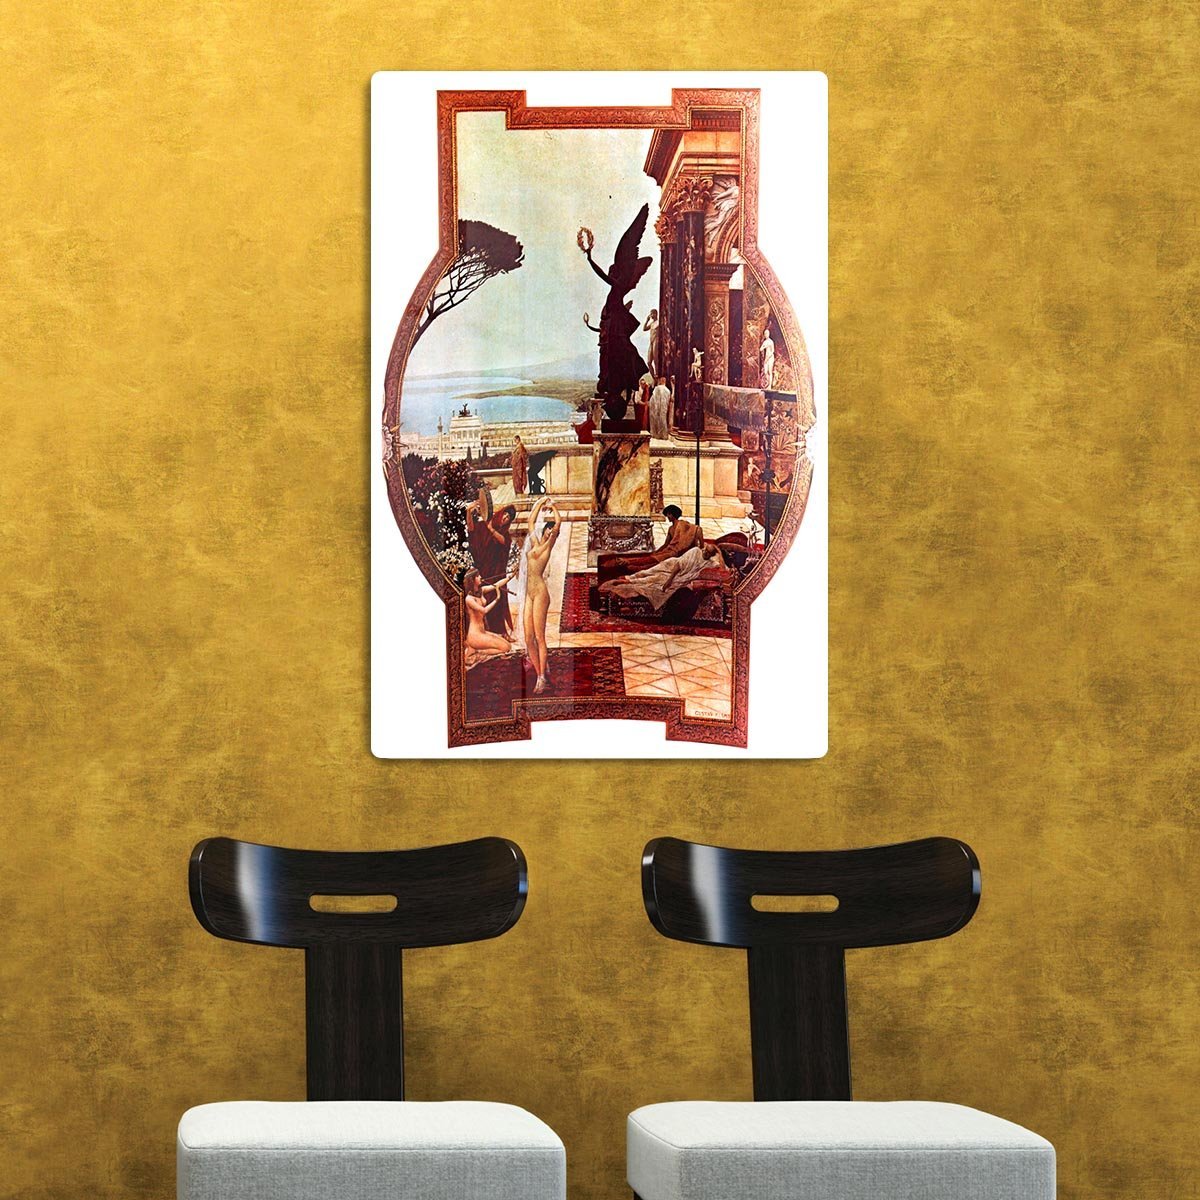 The Theatre of Taormina by Klimt HD Metal Print